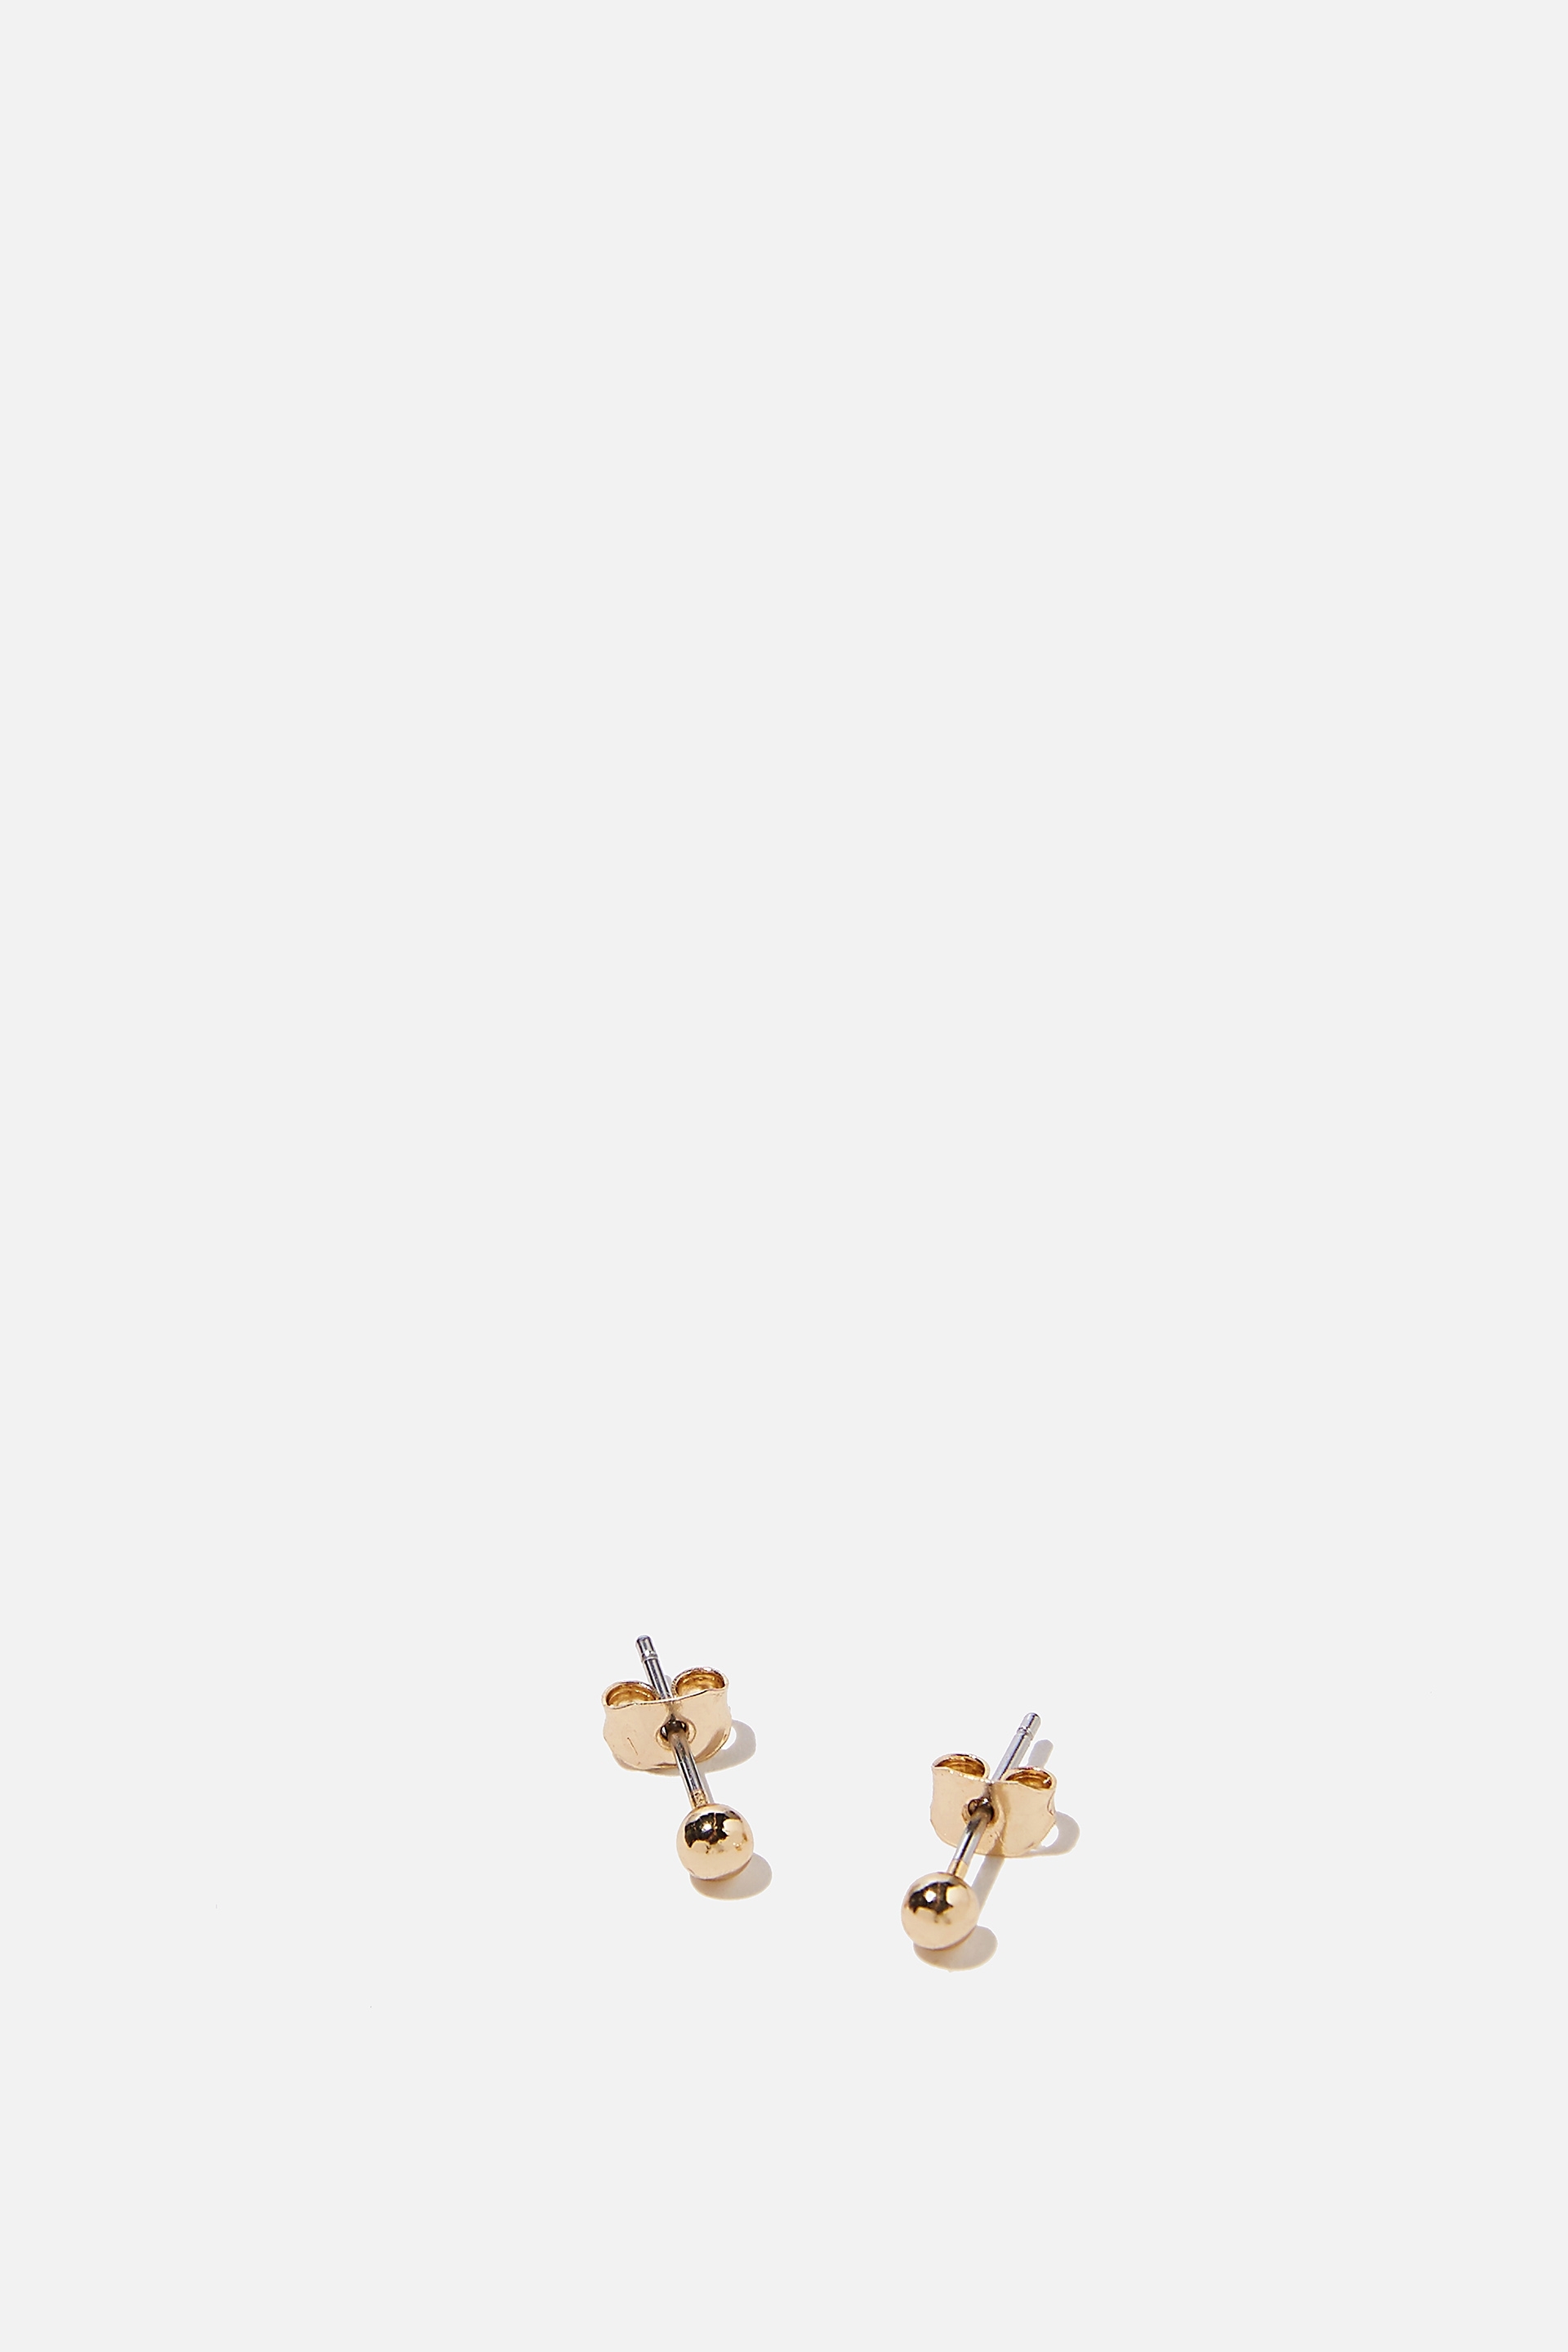 Rubi - Premium Stud Earrings - Gold plated ball